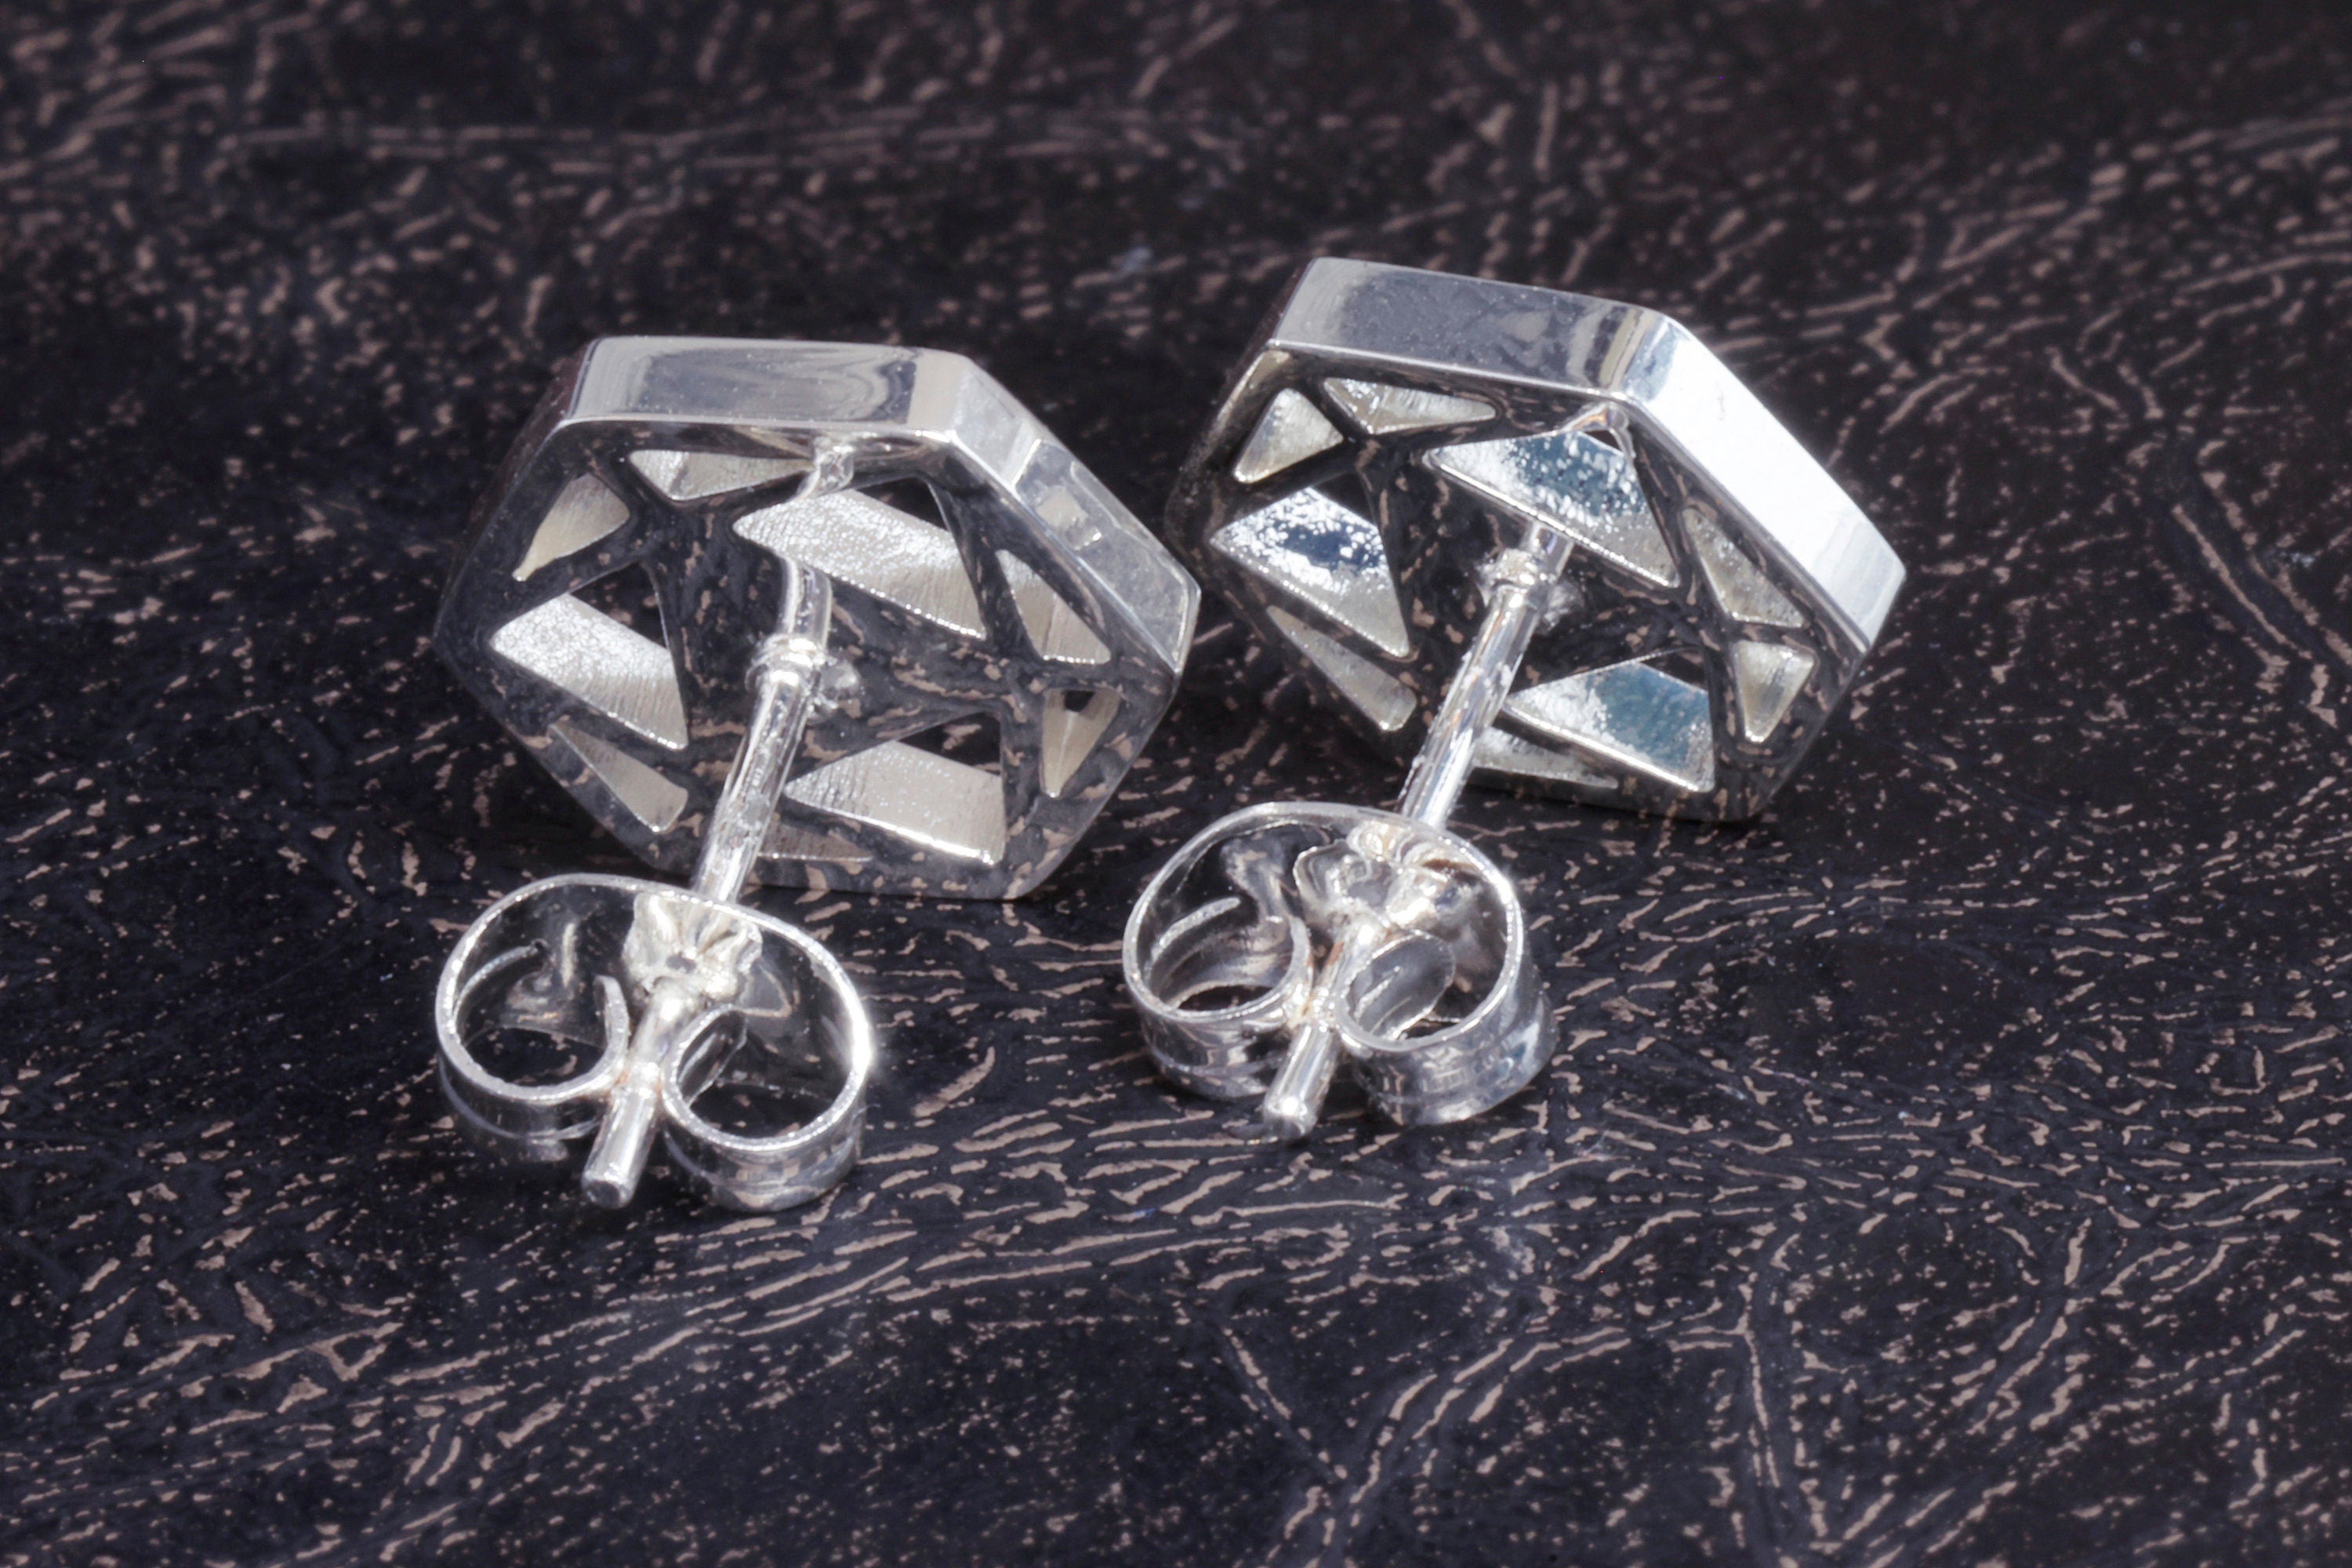 D20 Dice stud earrings, Dice earrings with ice white opal